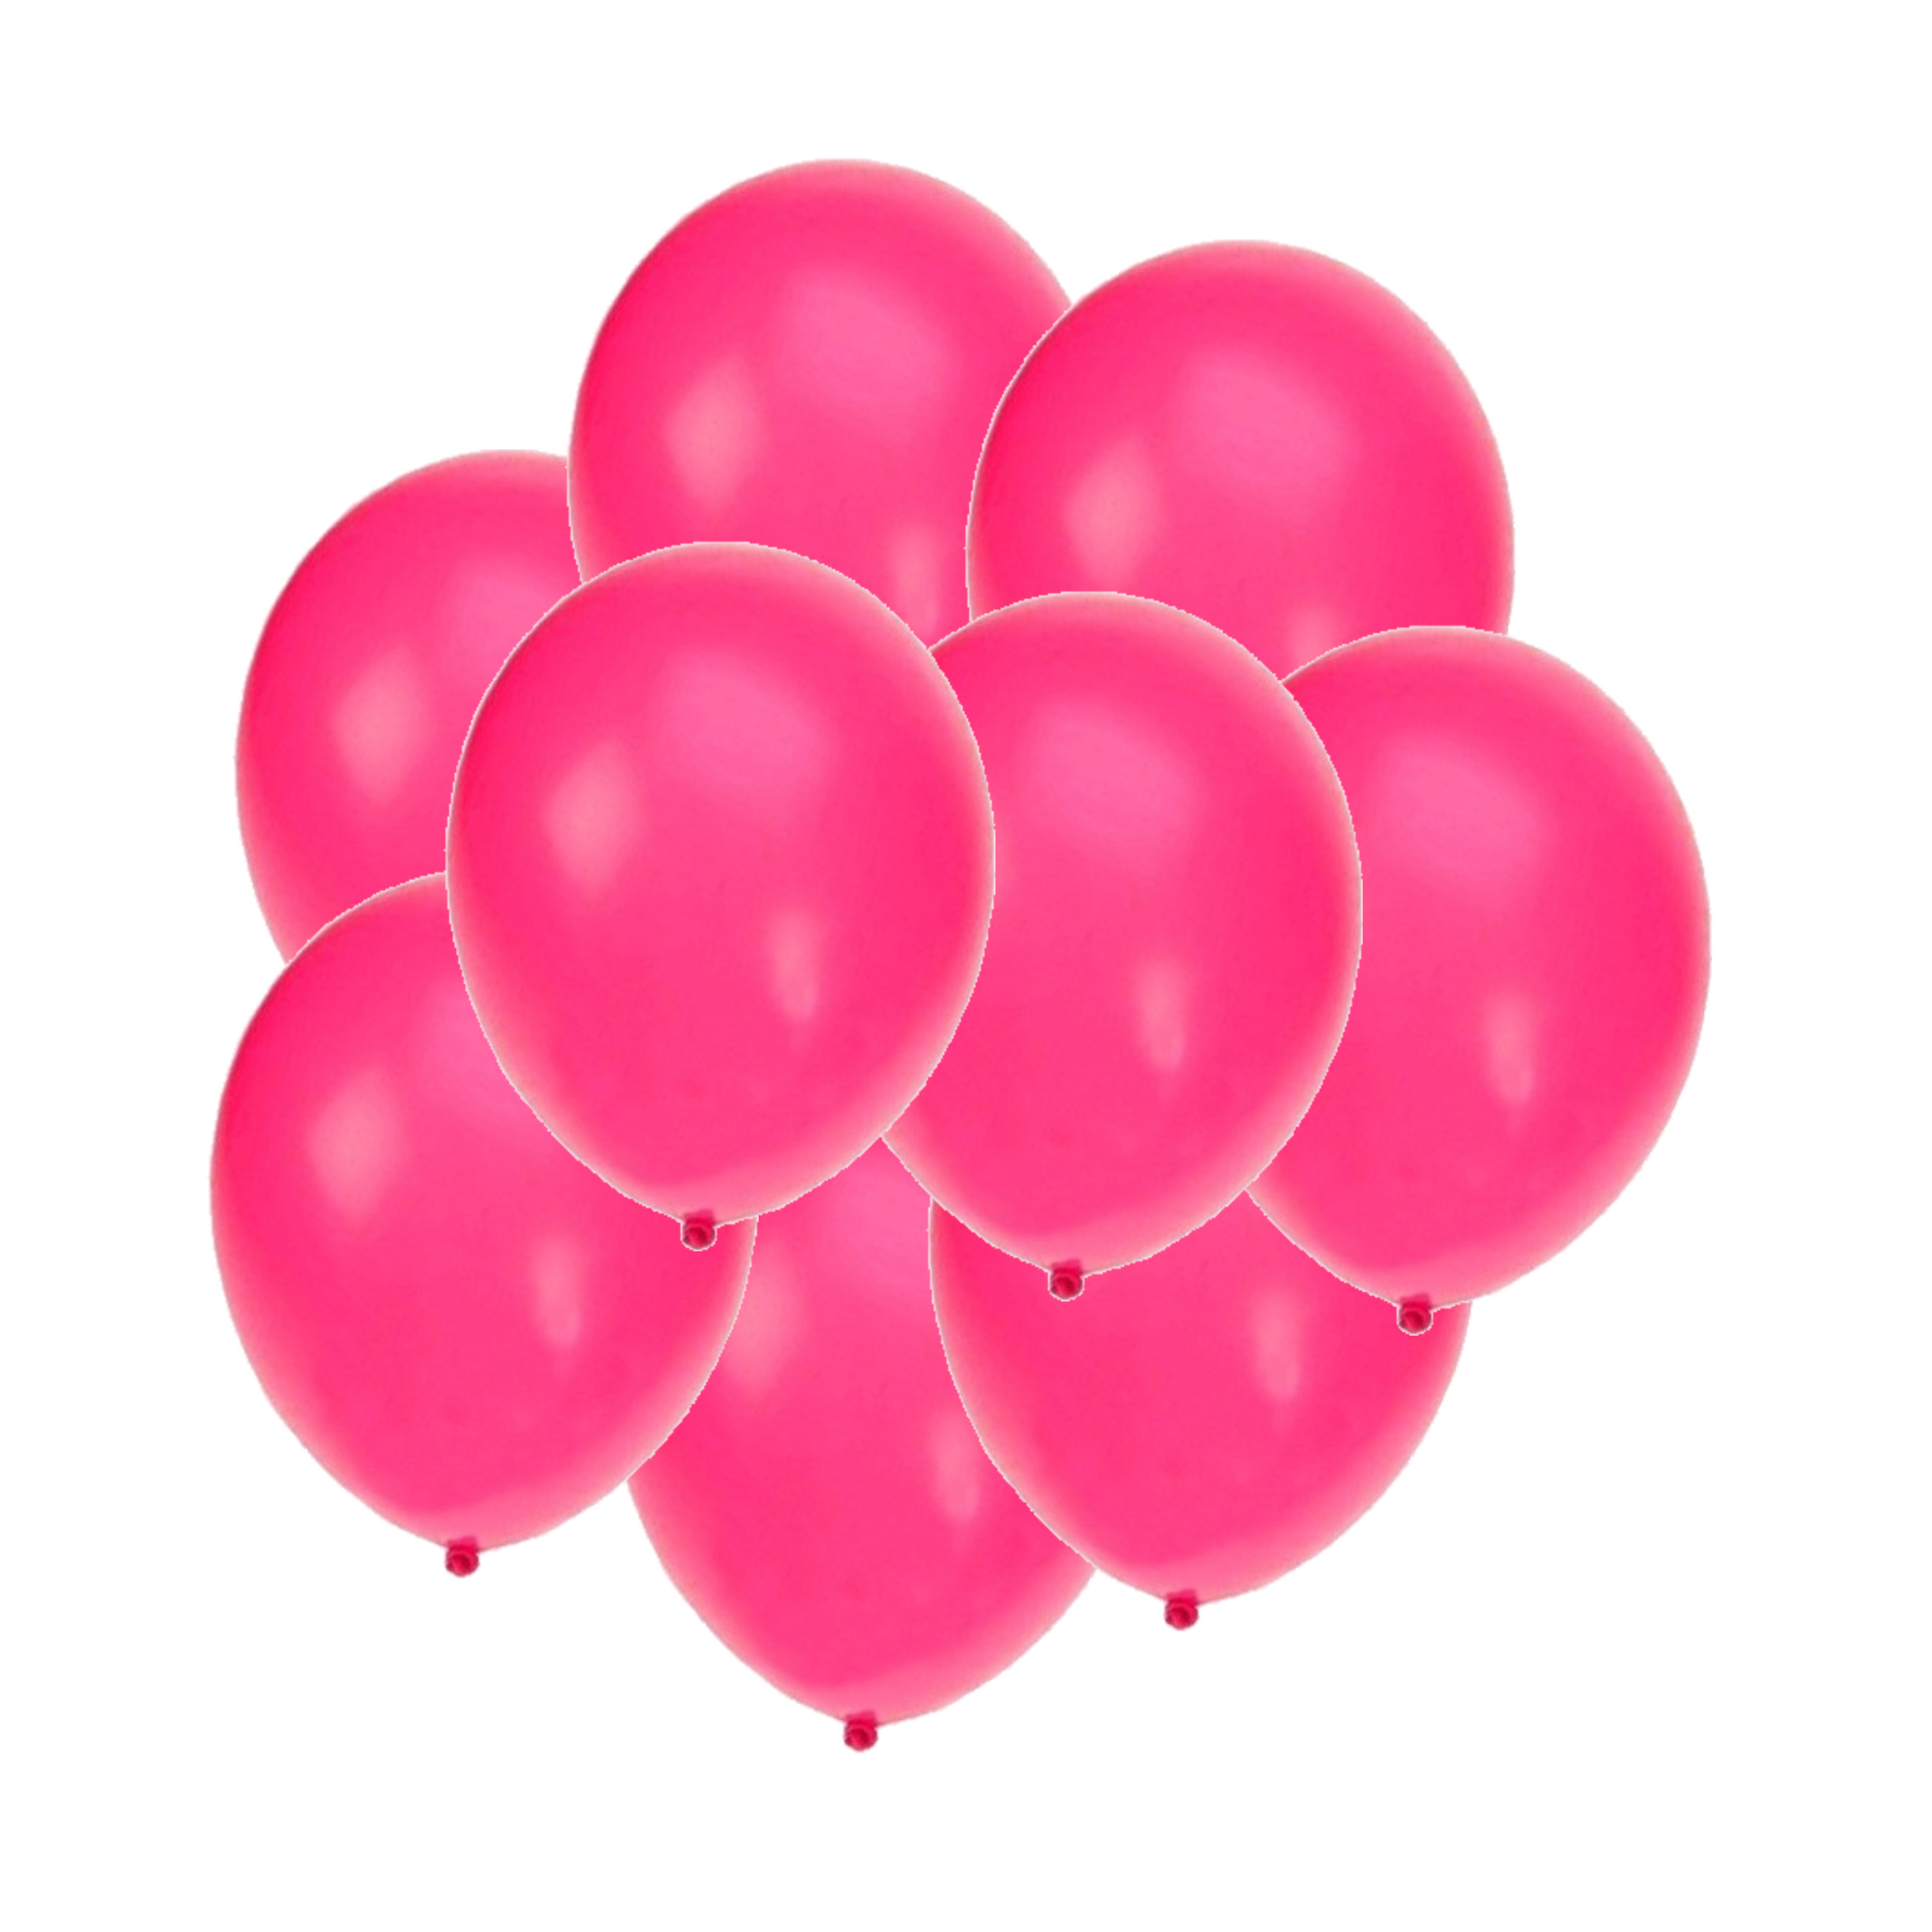 Bellatio decorations - Ballonnen knalroze/felroze 150x stuks rond 27 cm -